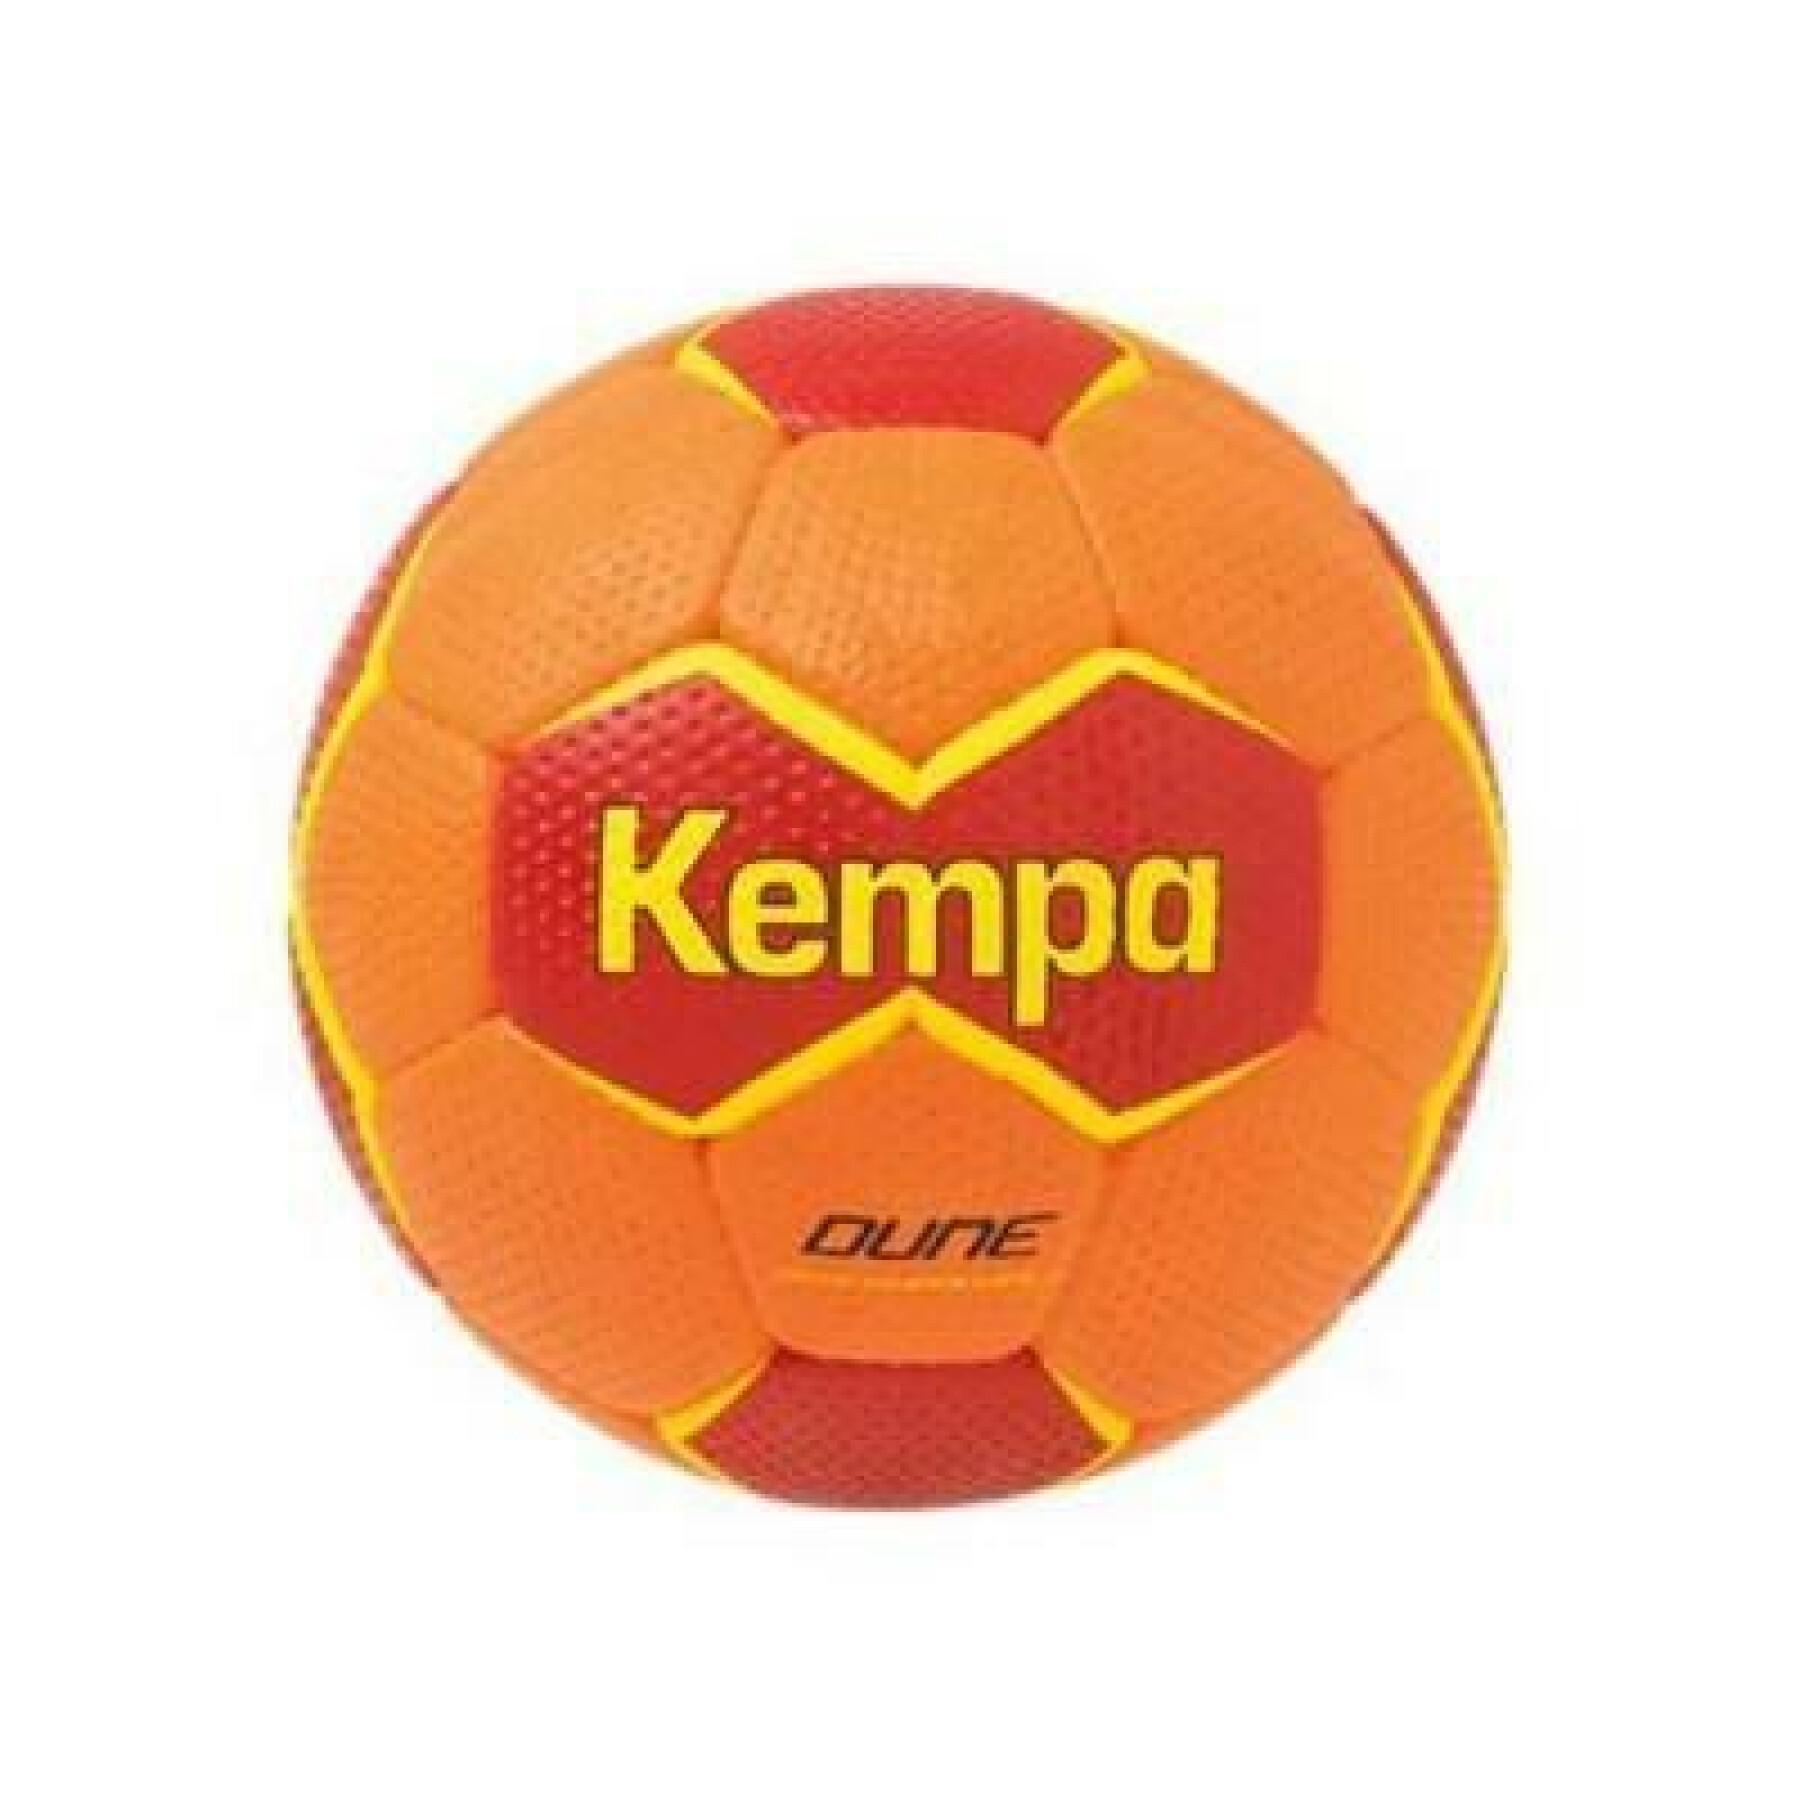 Ballon Kempa Dune Beachball T3 orange/rouge